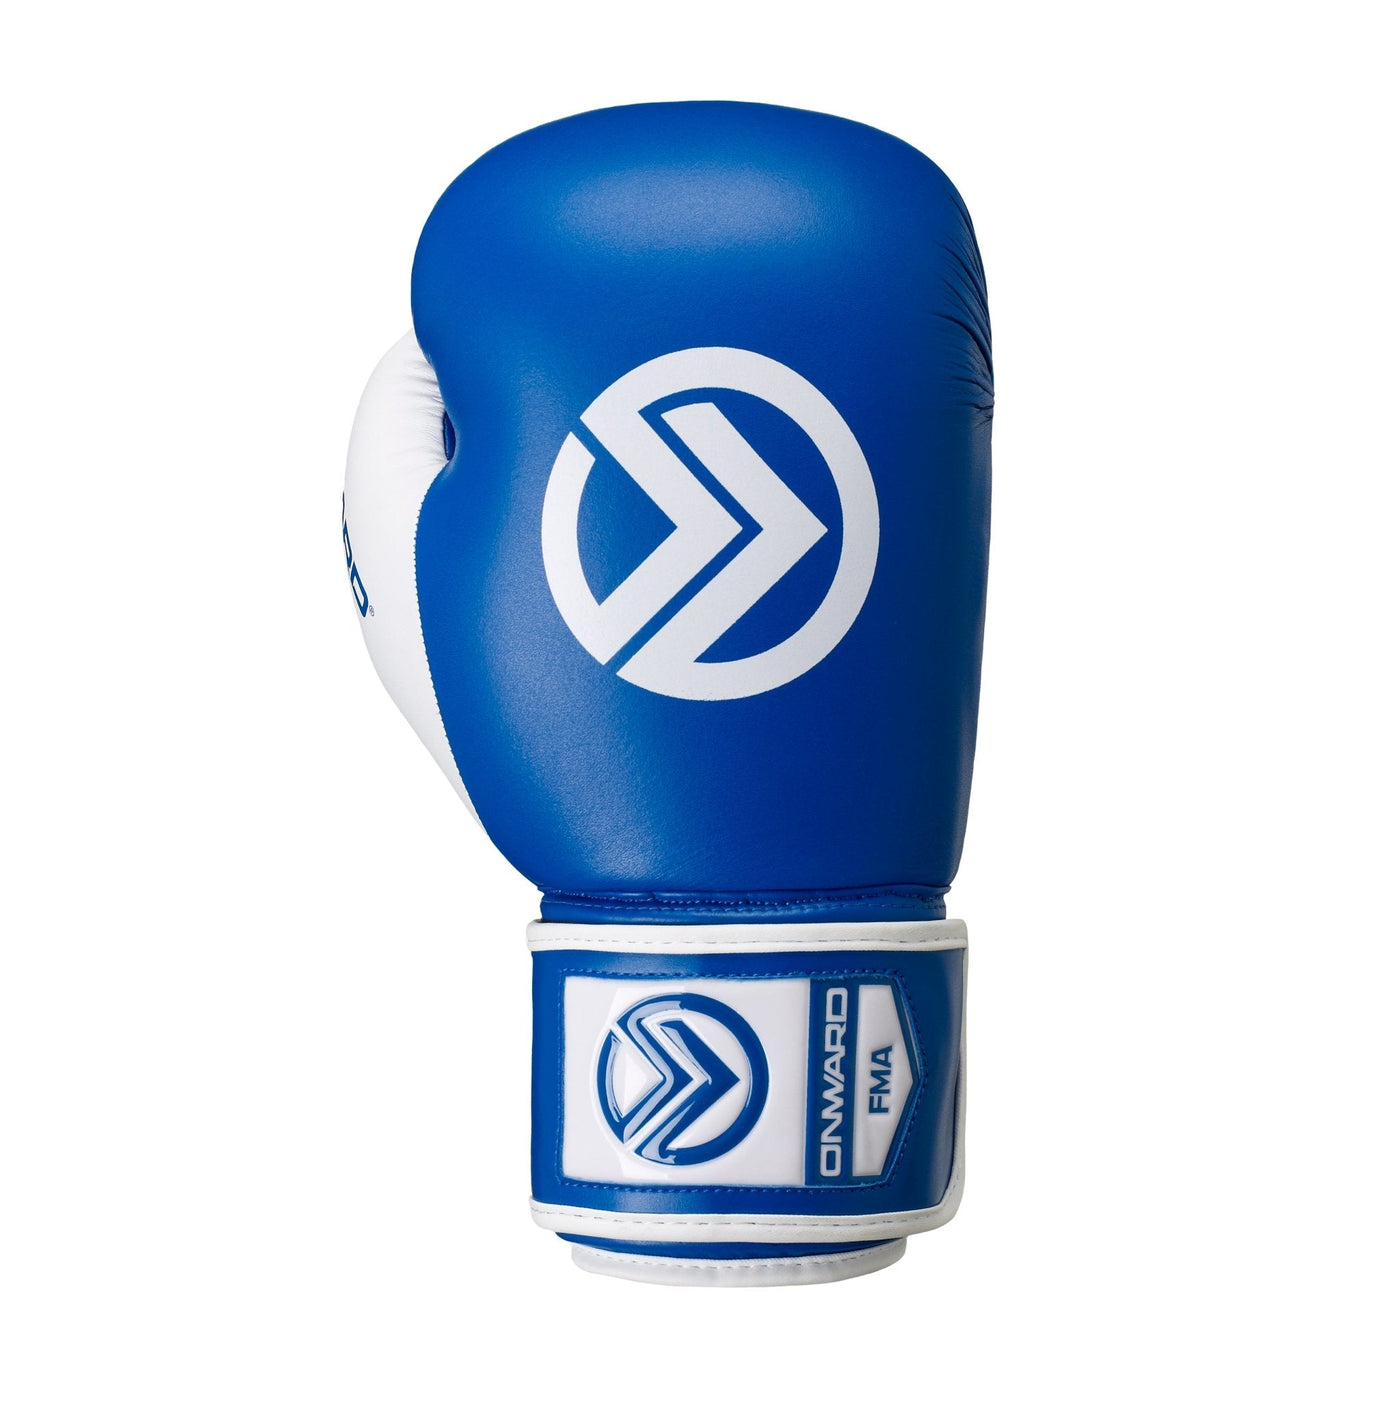 Colt Boxing Glove - Onward Online - 2AA005-470-8OZ